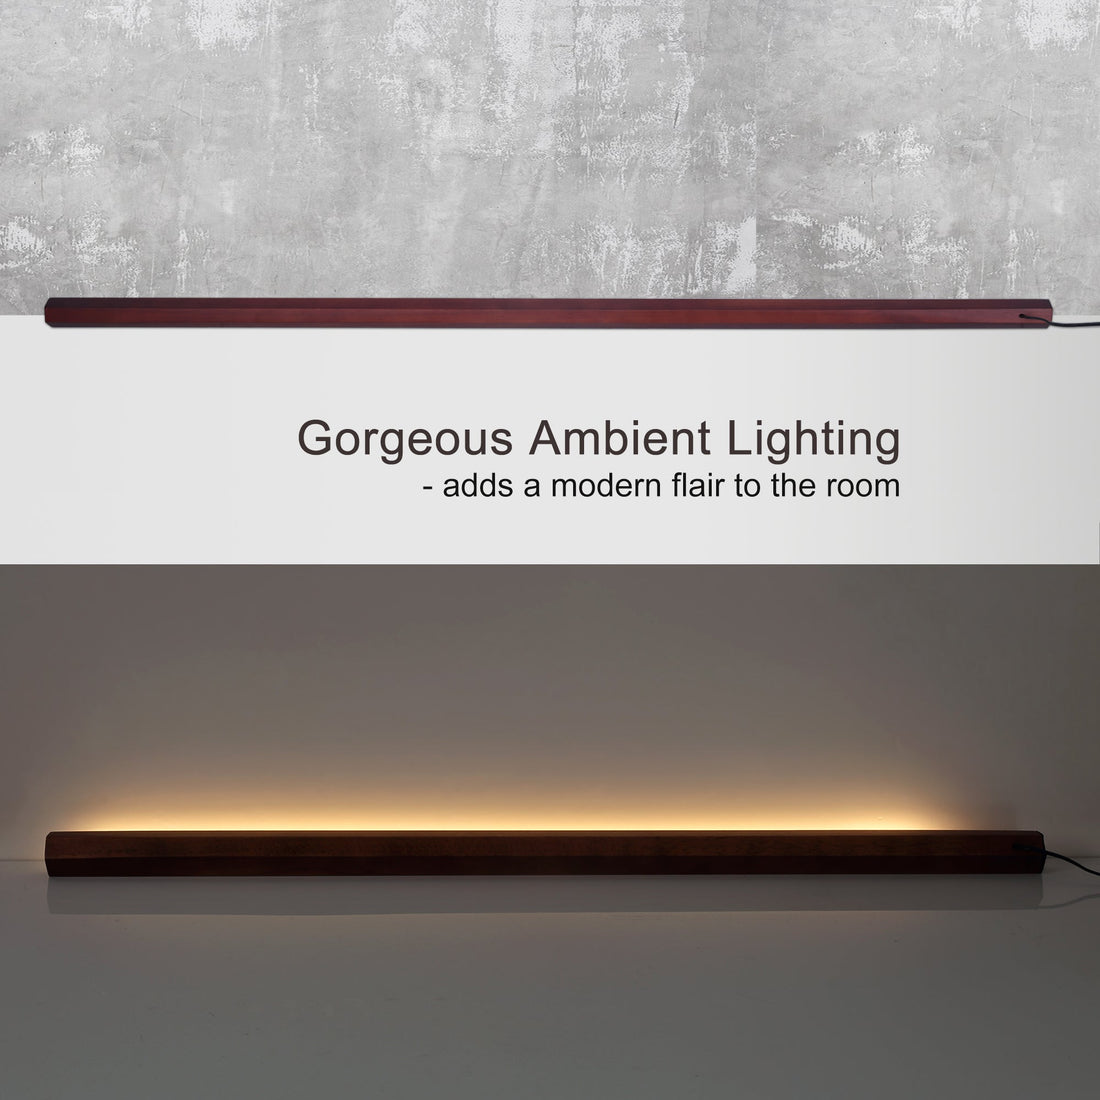 LED Floor Lamp - Solid Oak Wood